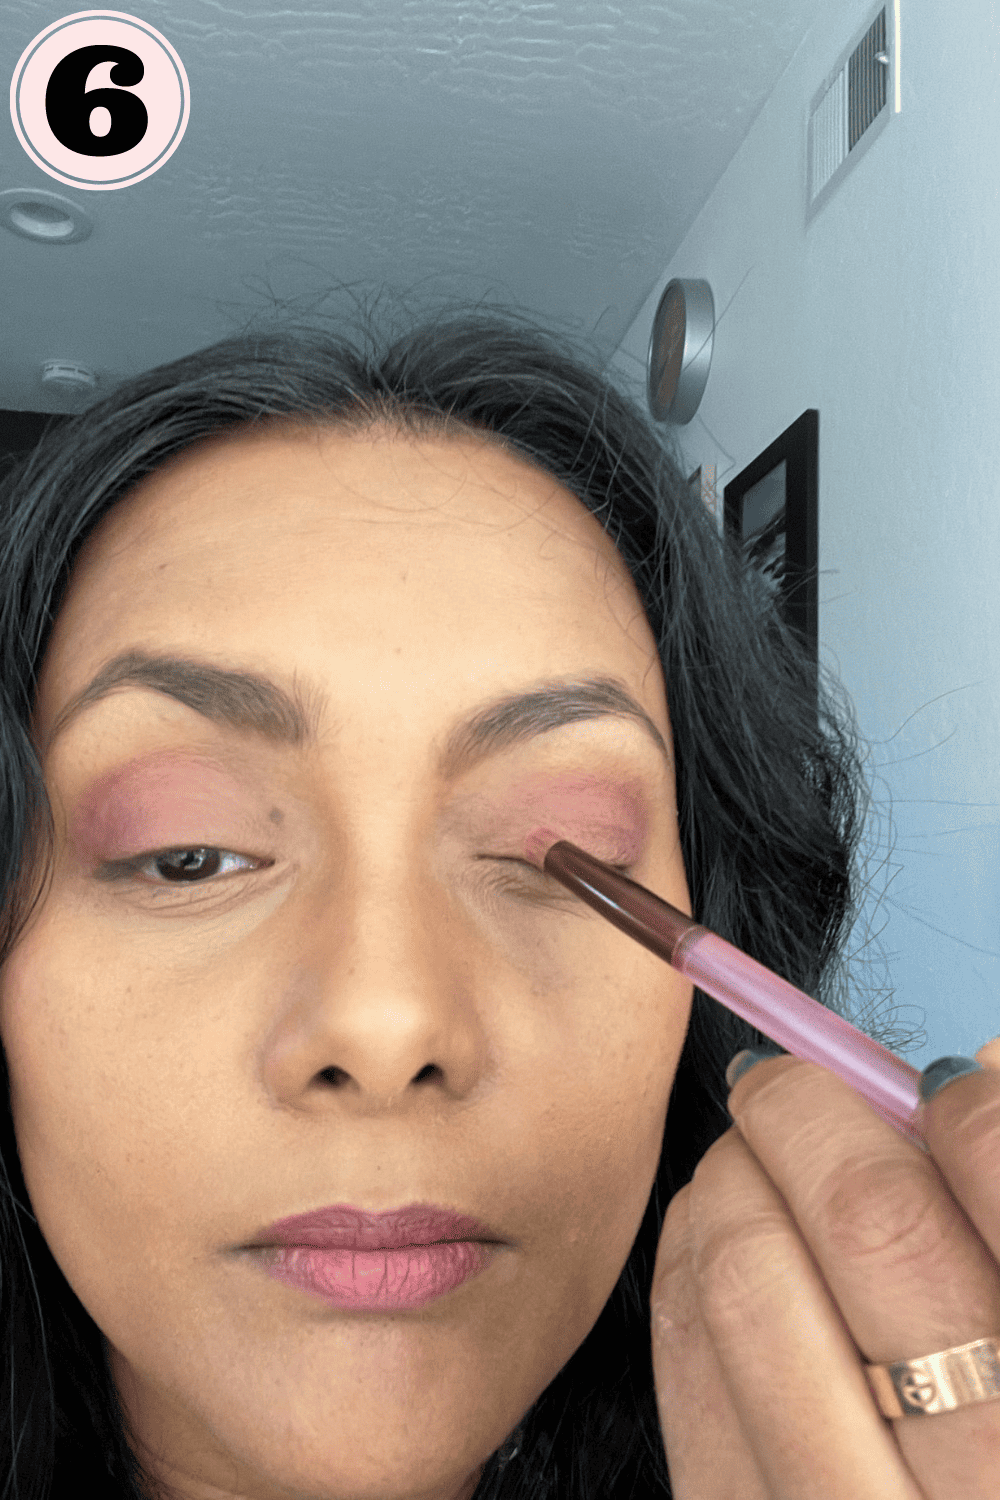 Applying lighter eyeshadow to my inner corner of eye lid